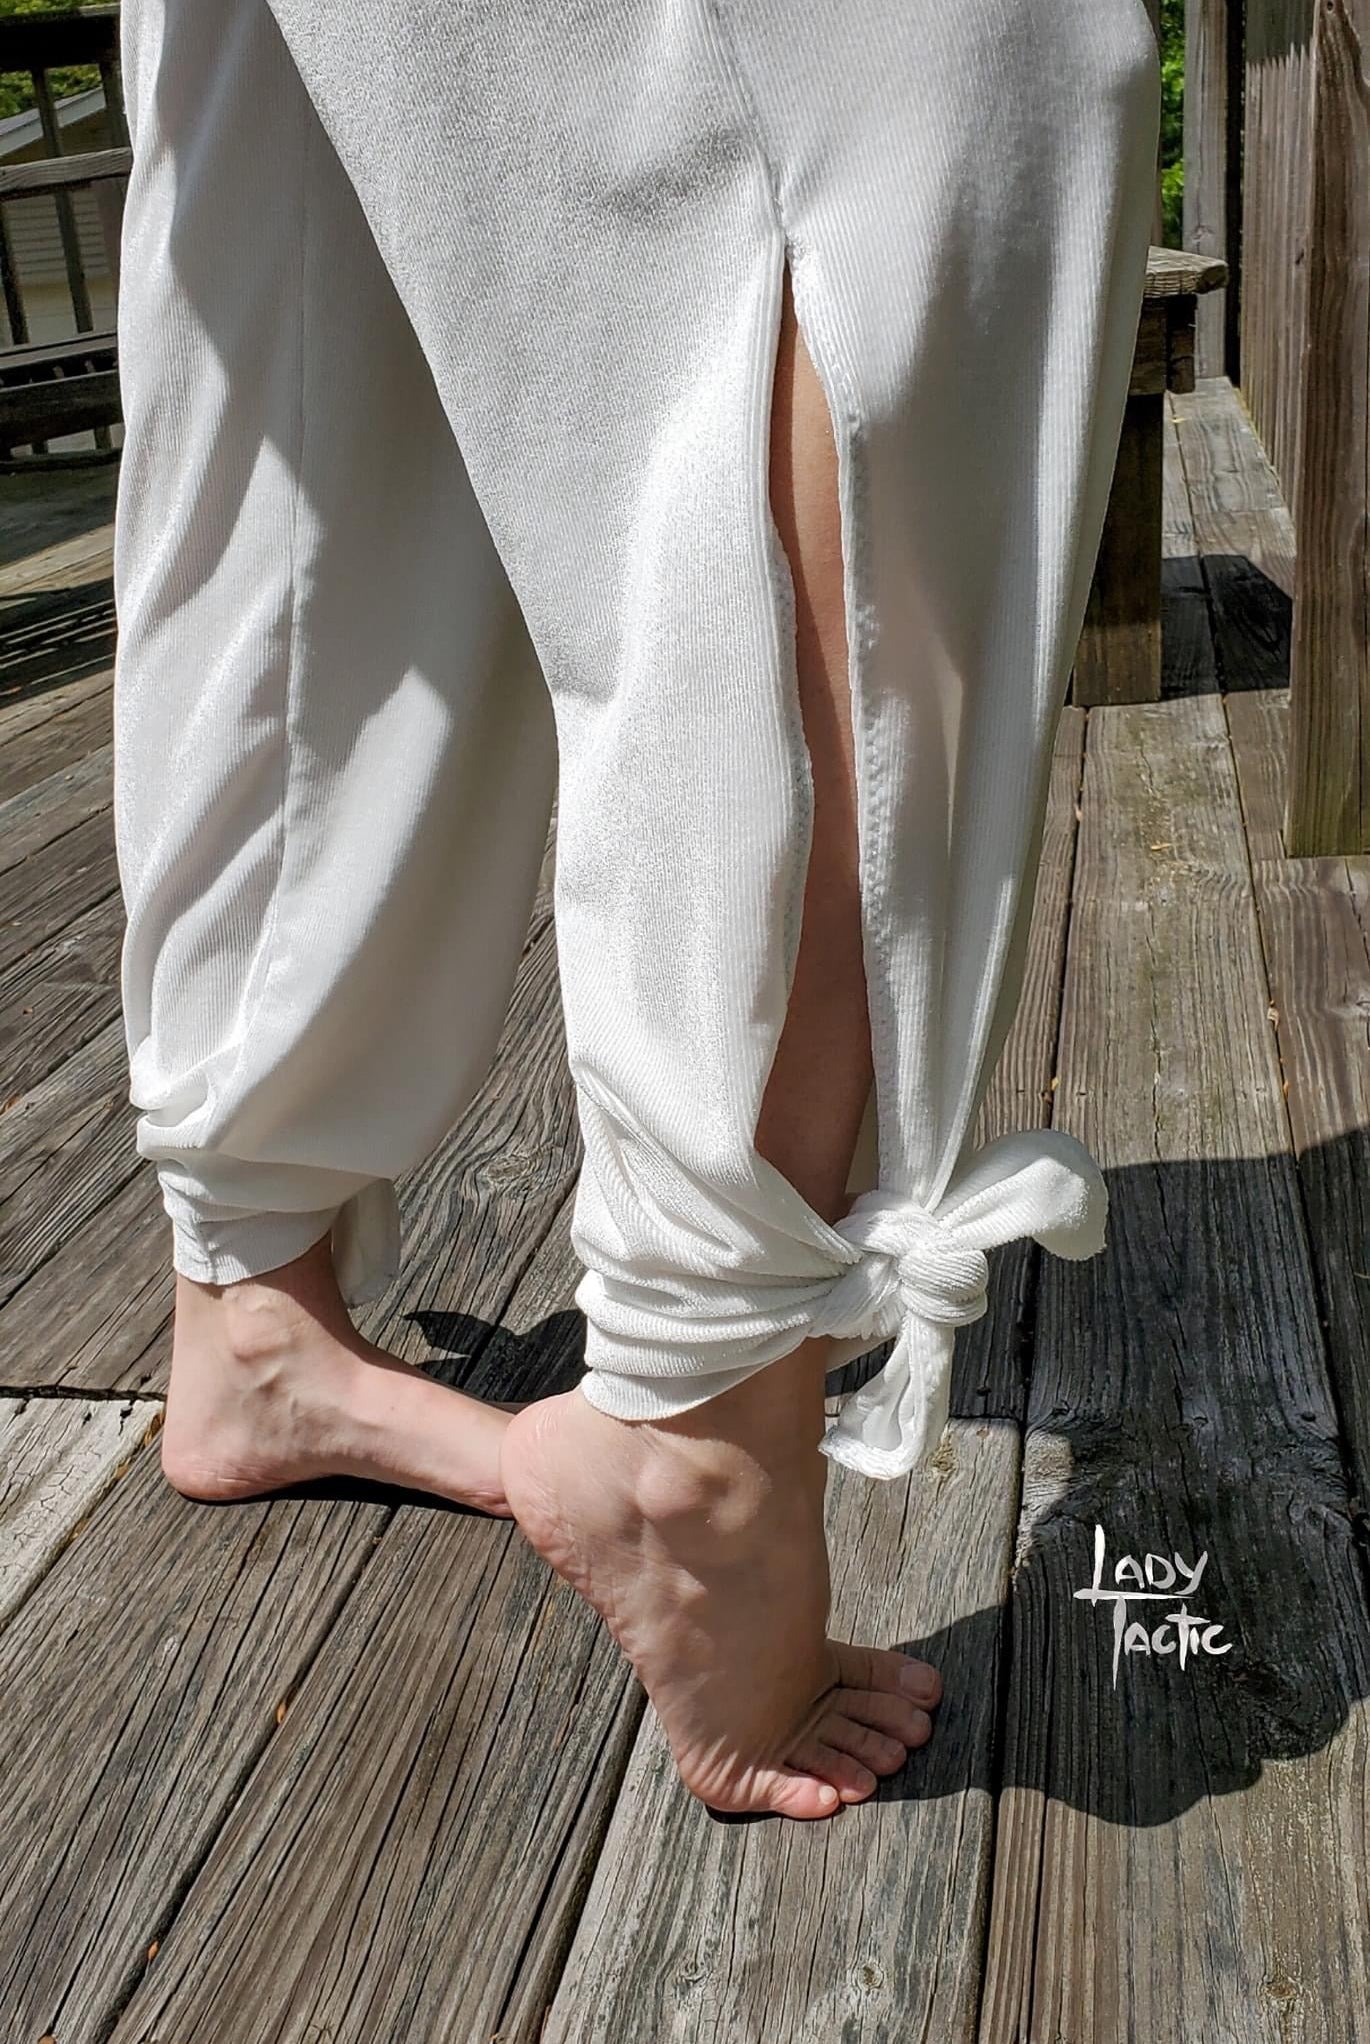 Last Cuts! Shiny White, Stretch Corduroy Knit. CRD-106. (RIB) - Boho Fabrics